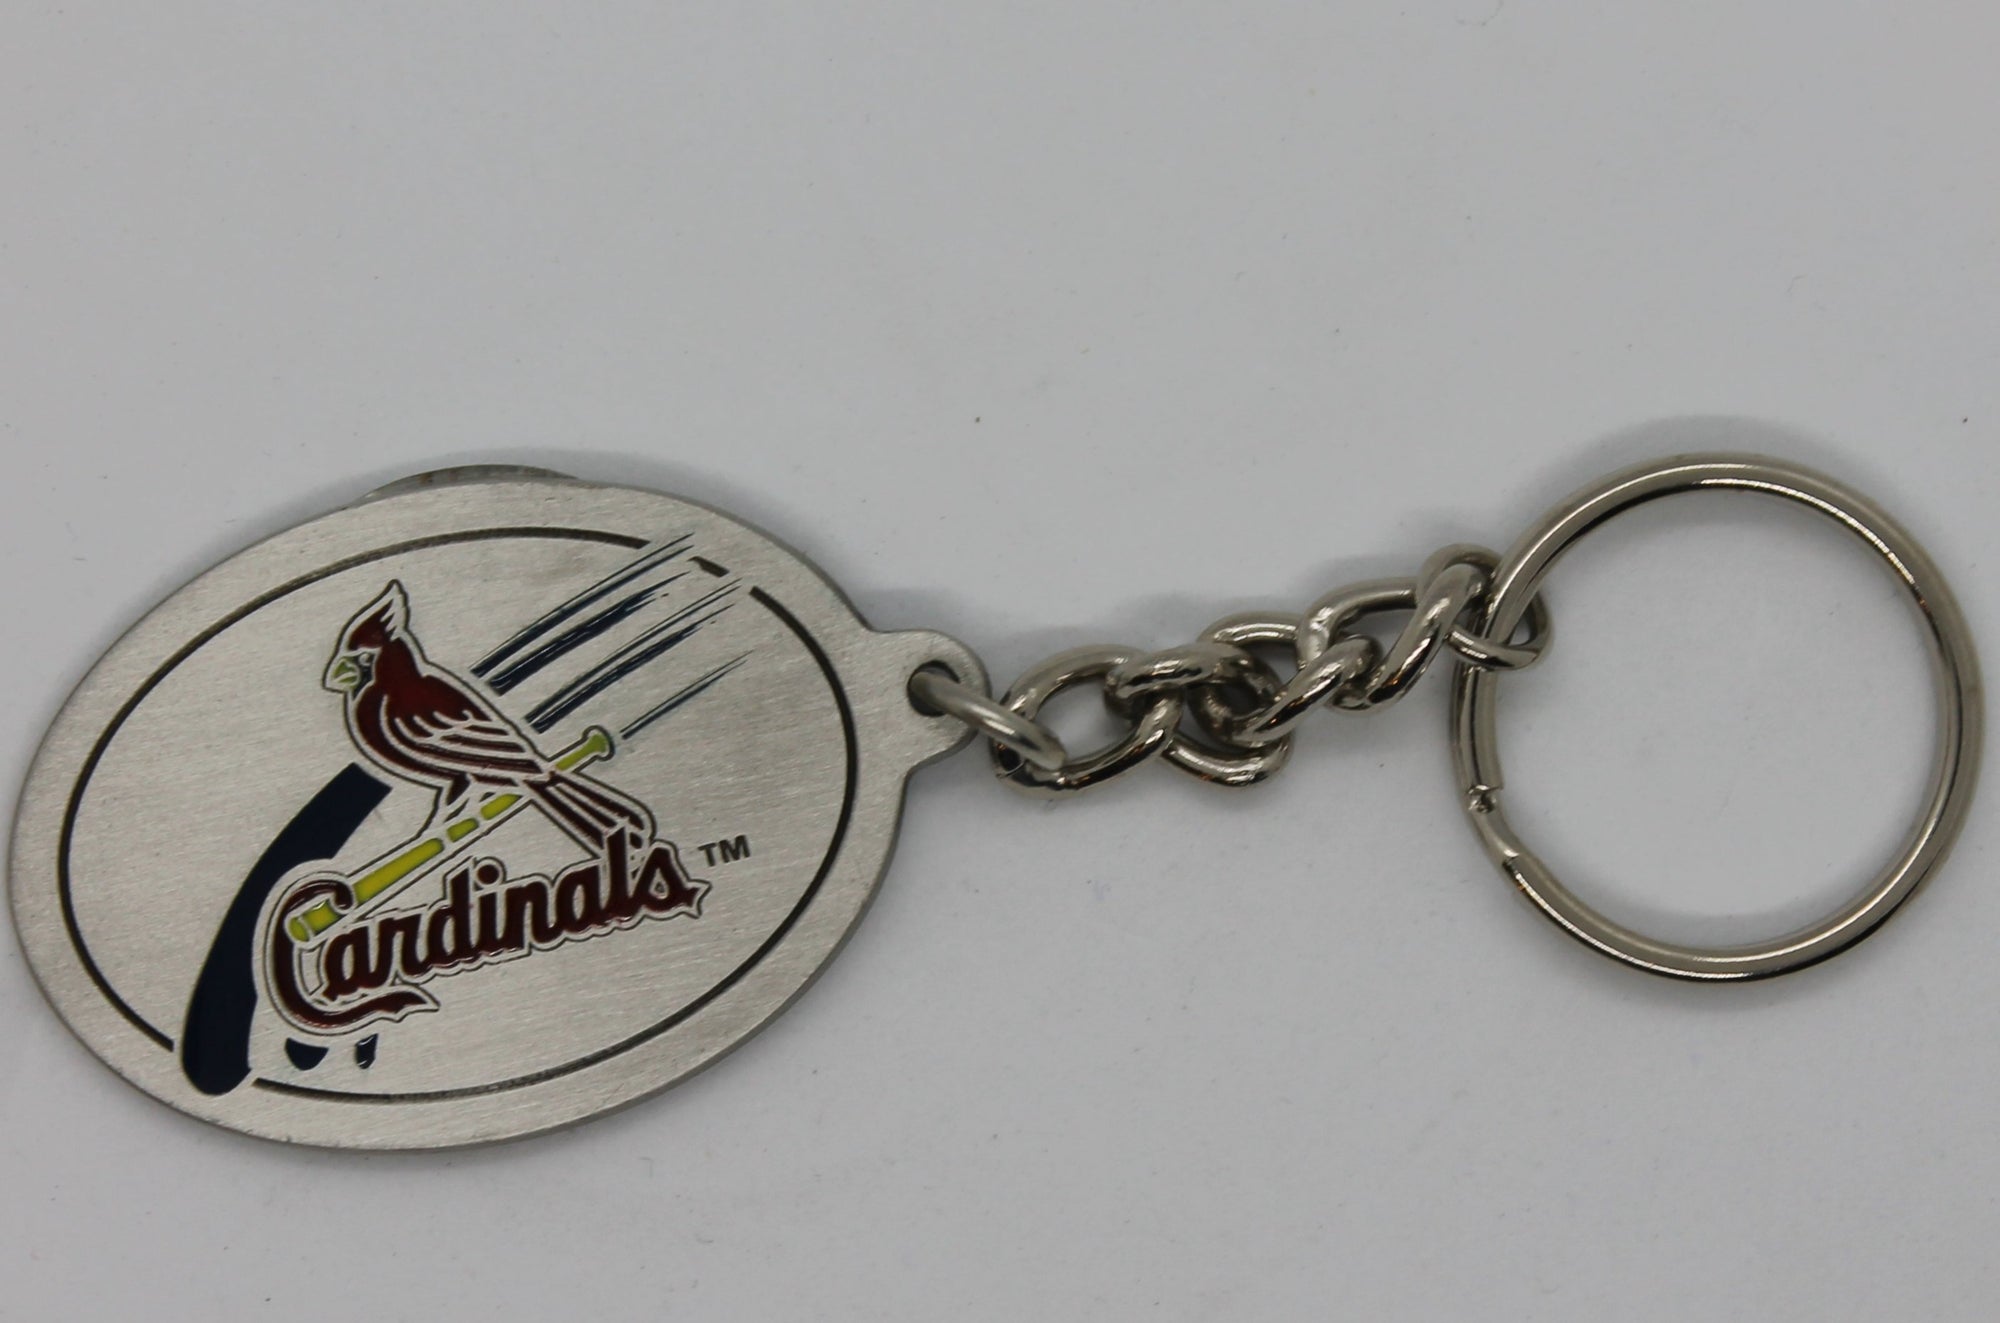 MLB St. Louis Cardinals Metal Key Chain